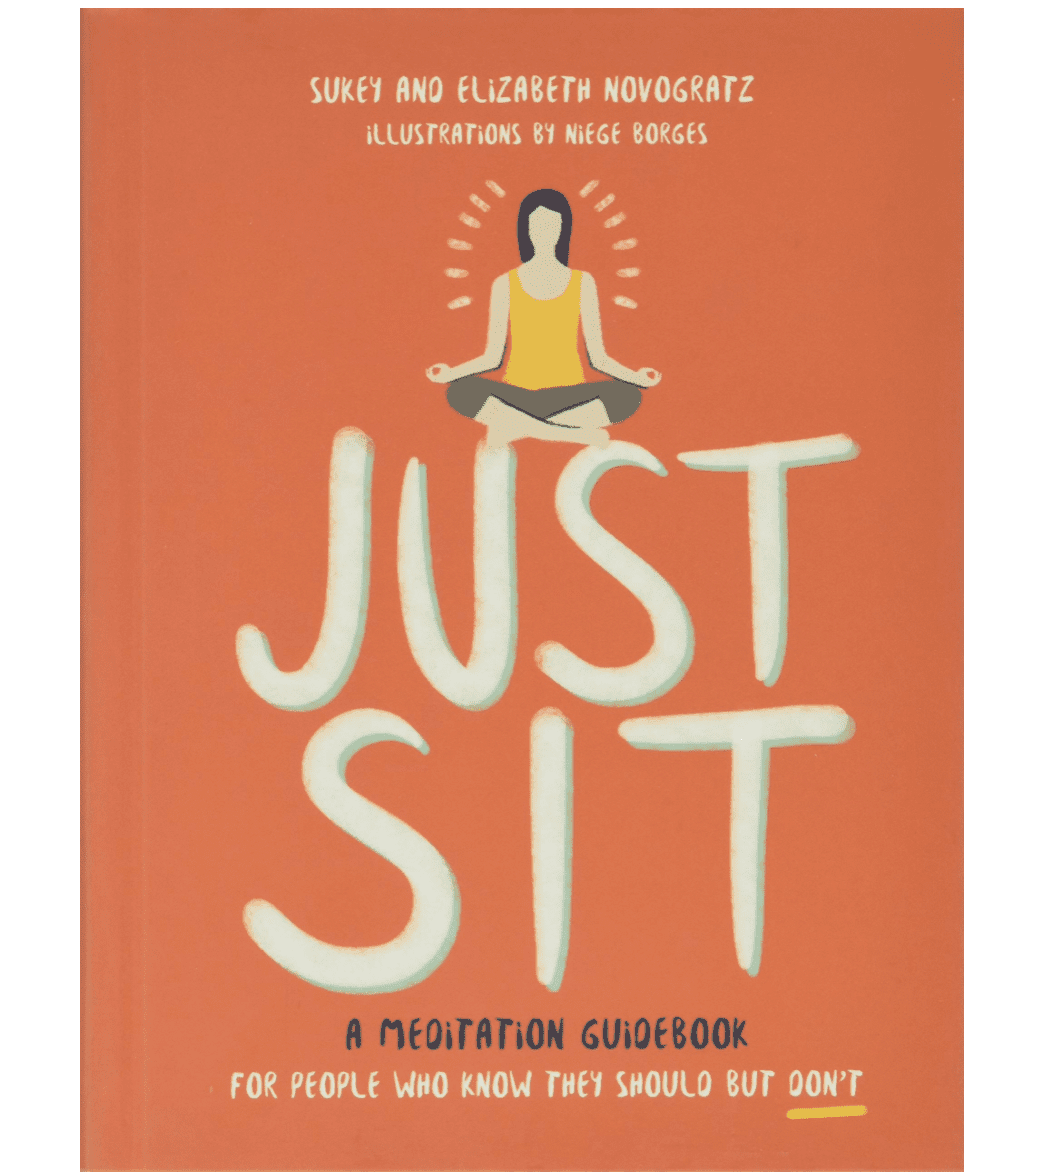 Just Sit, by Sukey and Elizabeth Novogratz